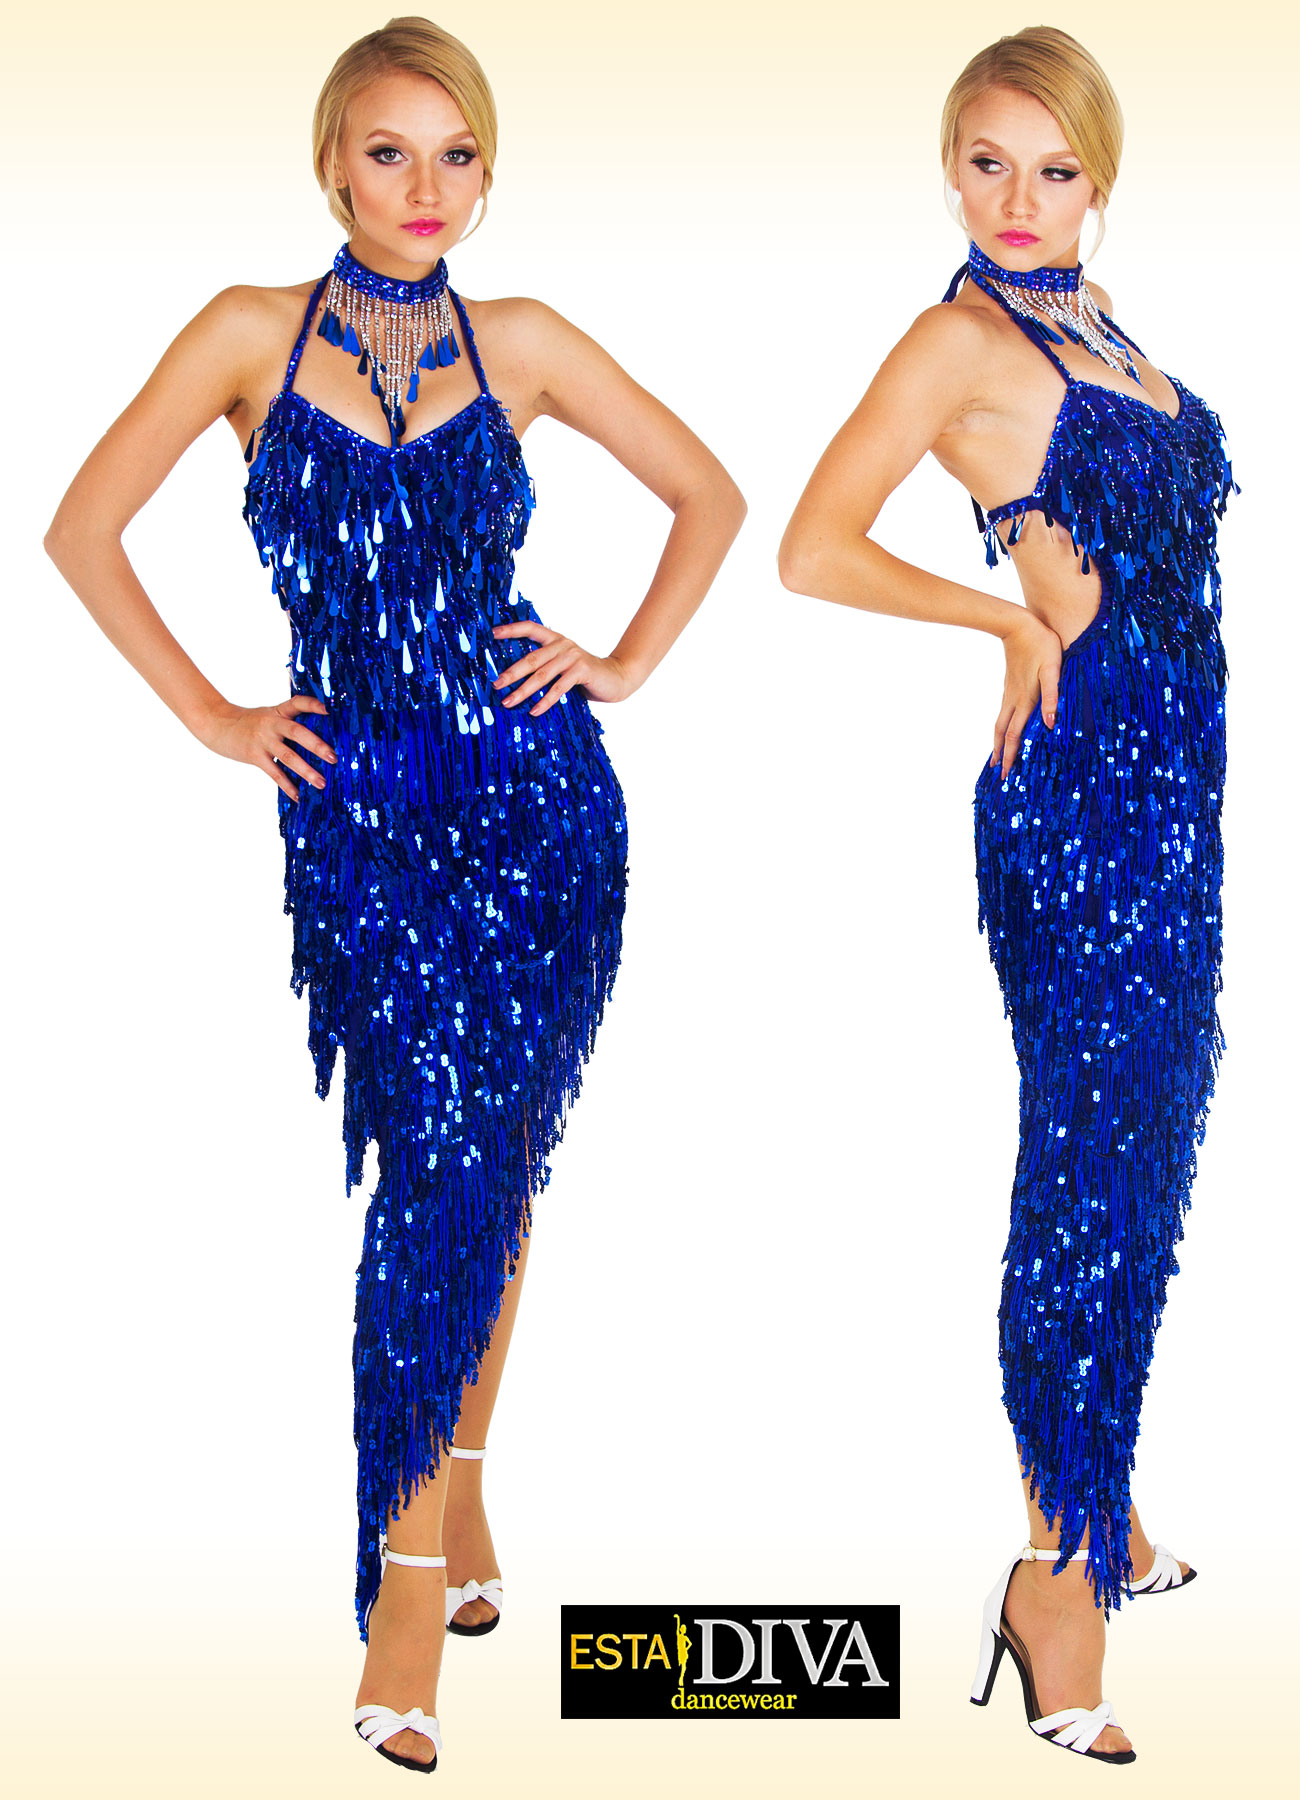 Latin Salsa Dress Galana Franja Sequin Fringe Dress 22 €19800 Esta Diva Dancewear 